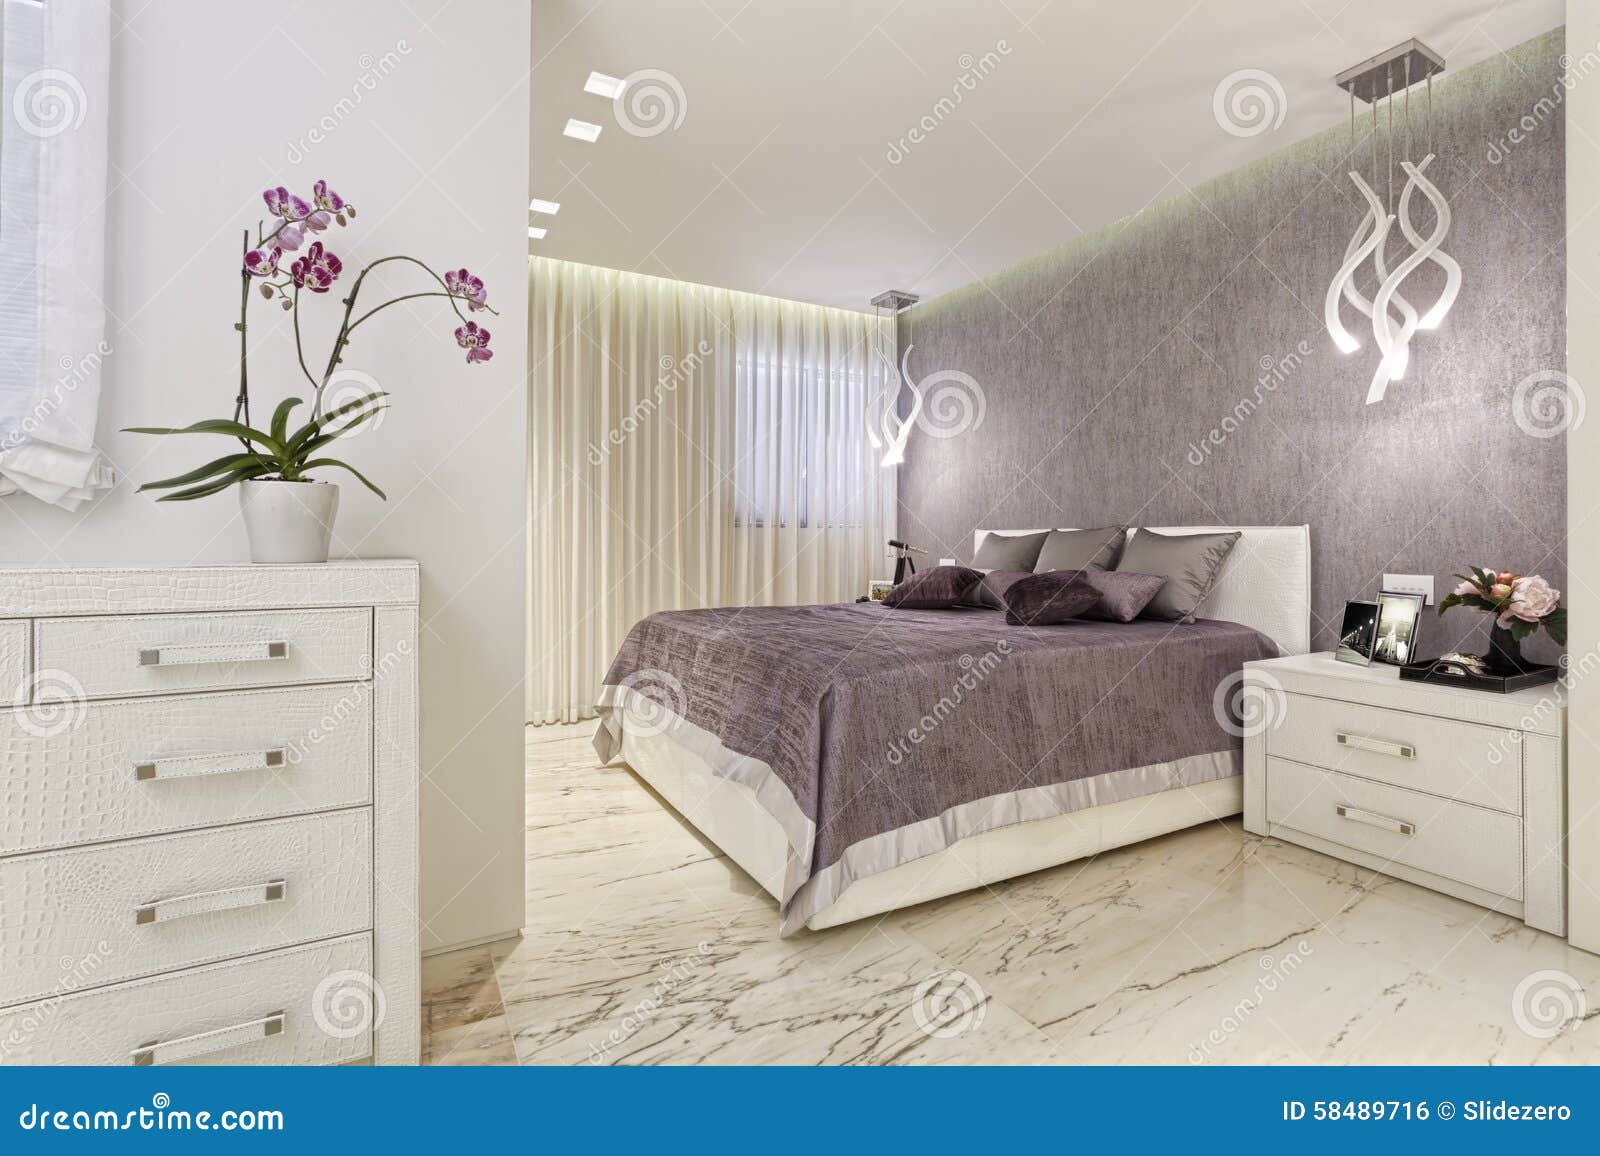 Best Wallpaper Design Ideas For Bedroom Walls  DesignCafe